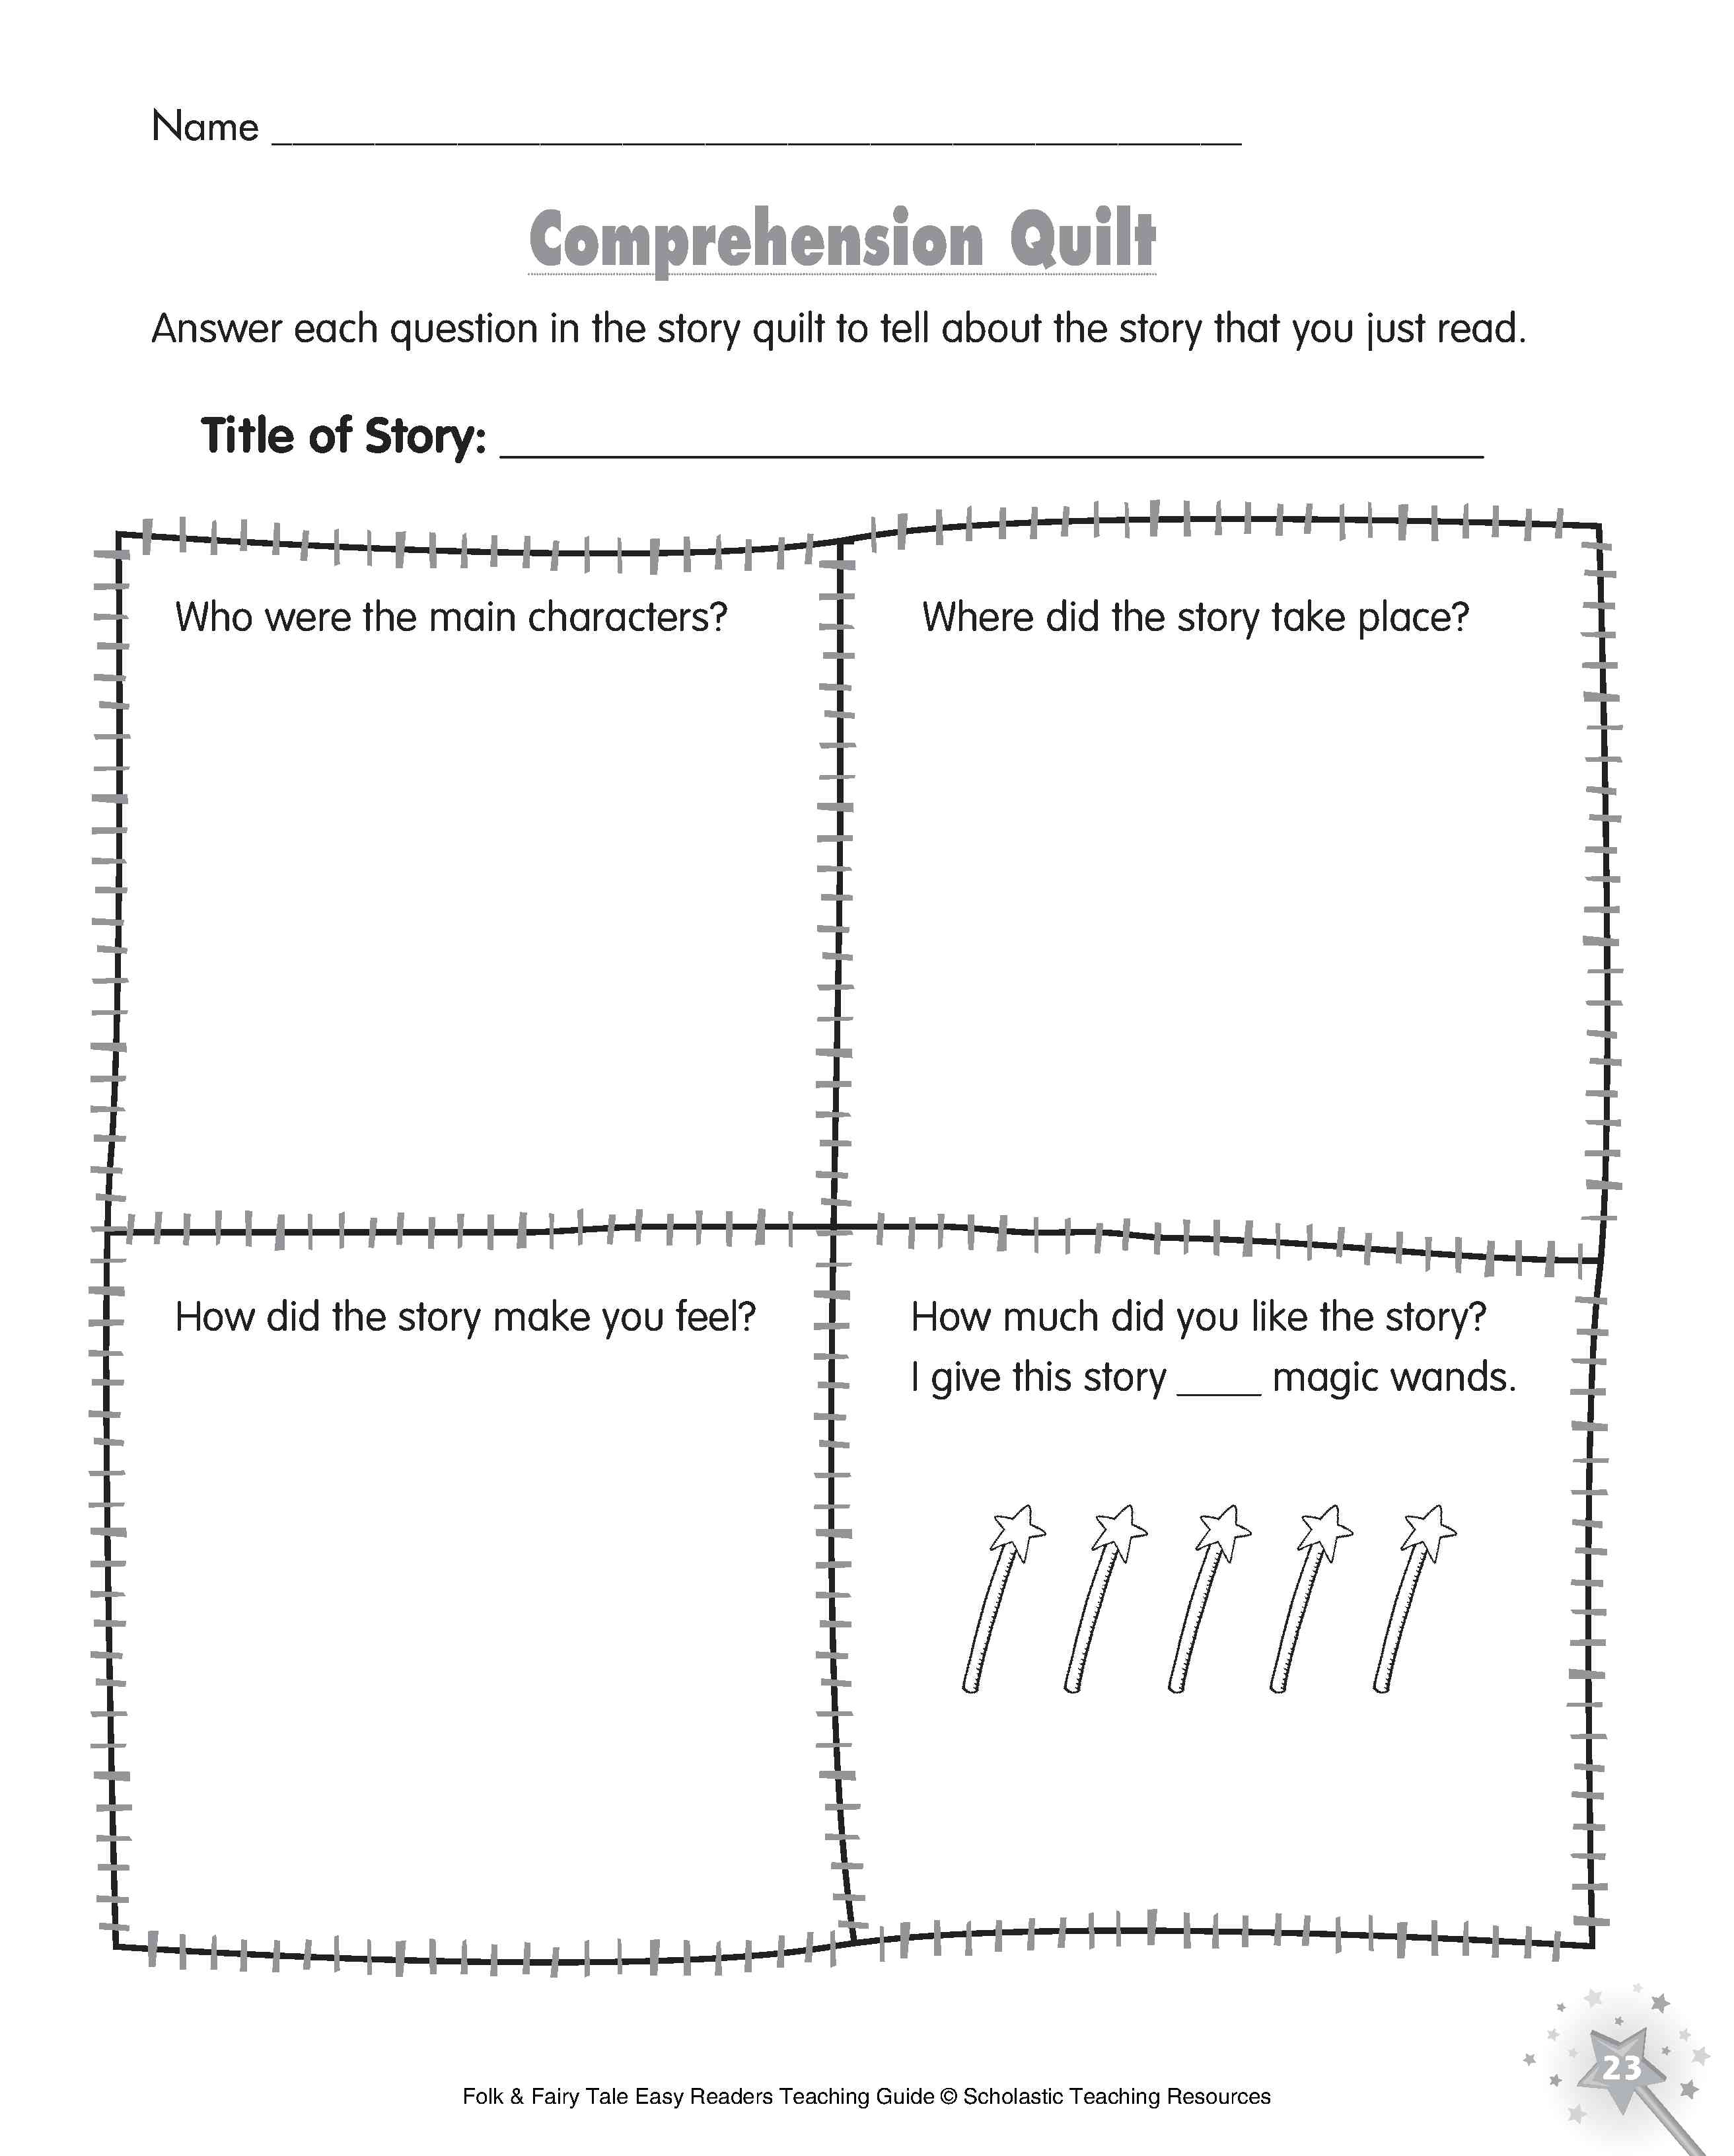 Reading Comprehension Graphic Organizers Printable Image